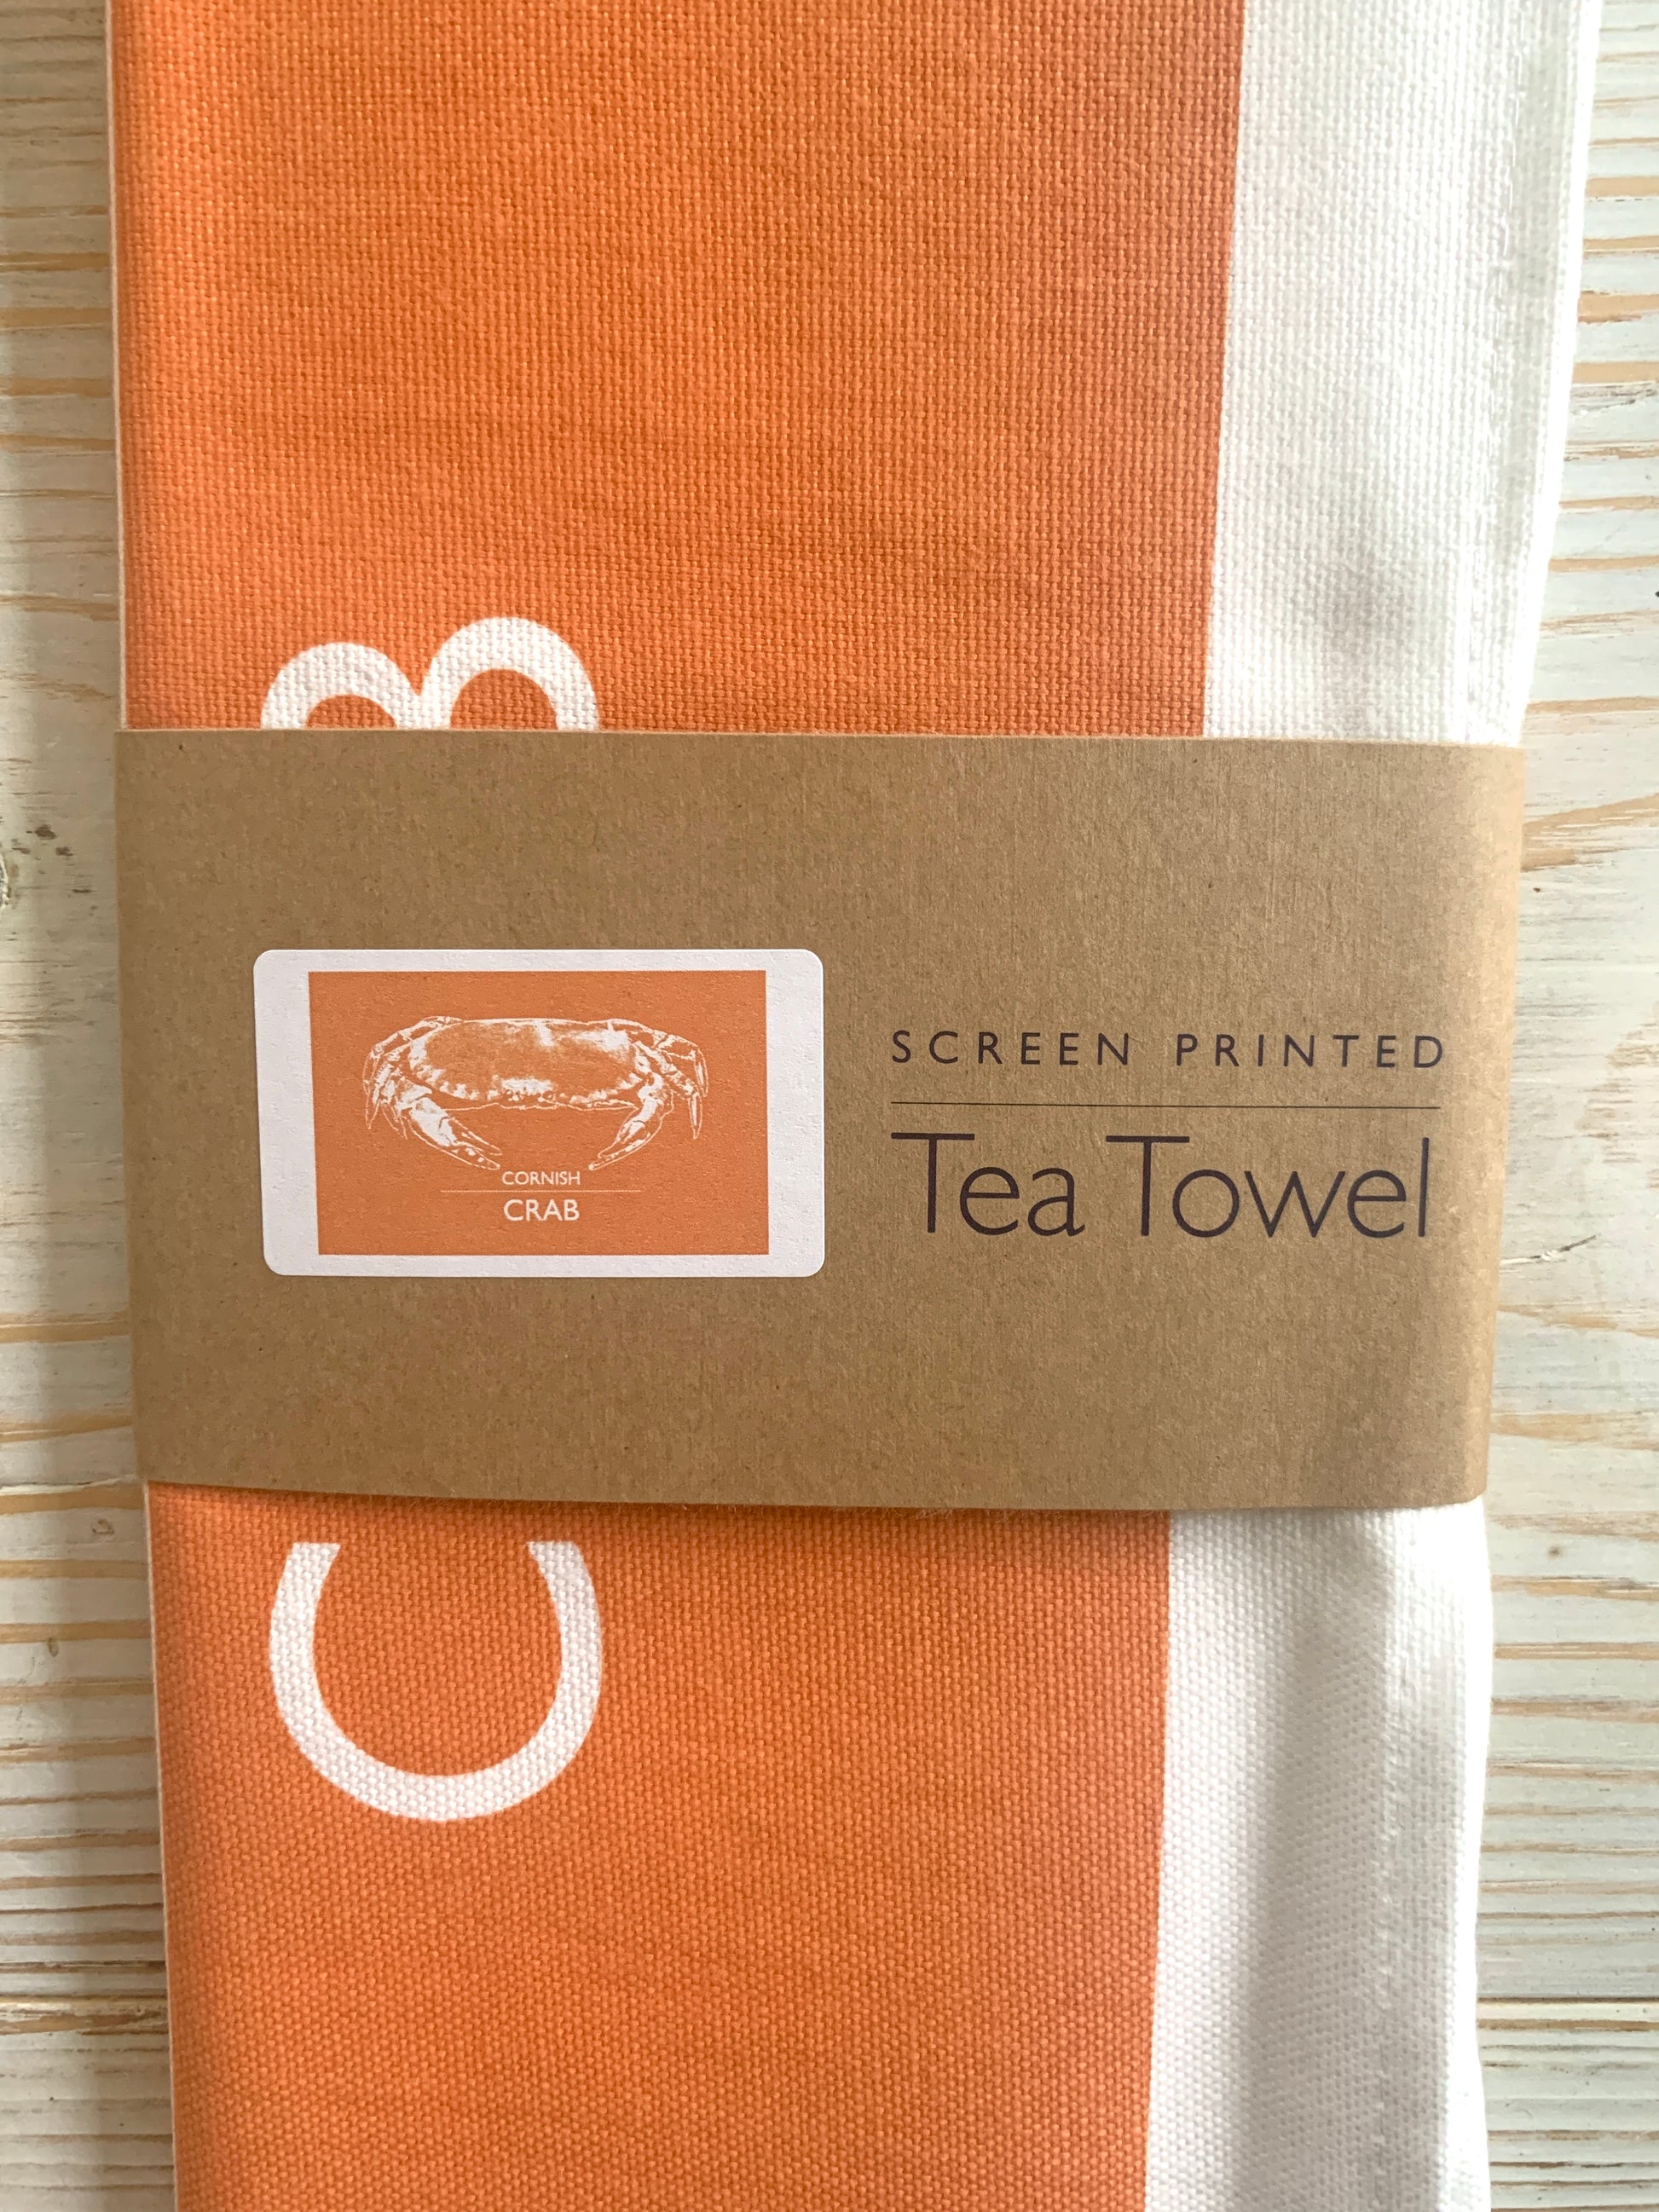 An orange tea towel with a crab design